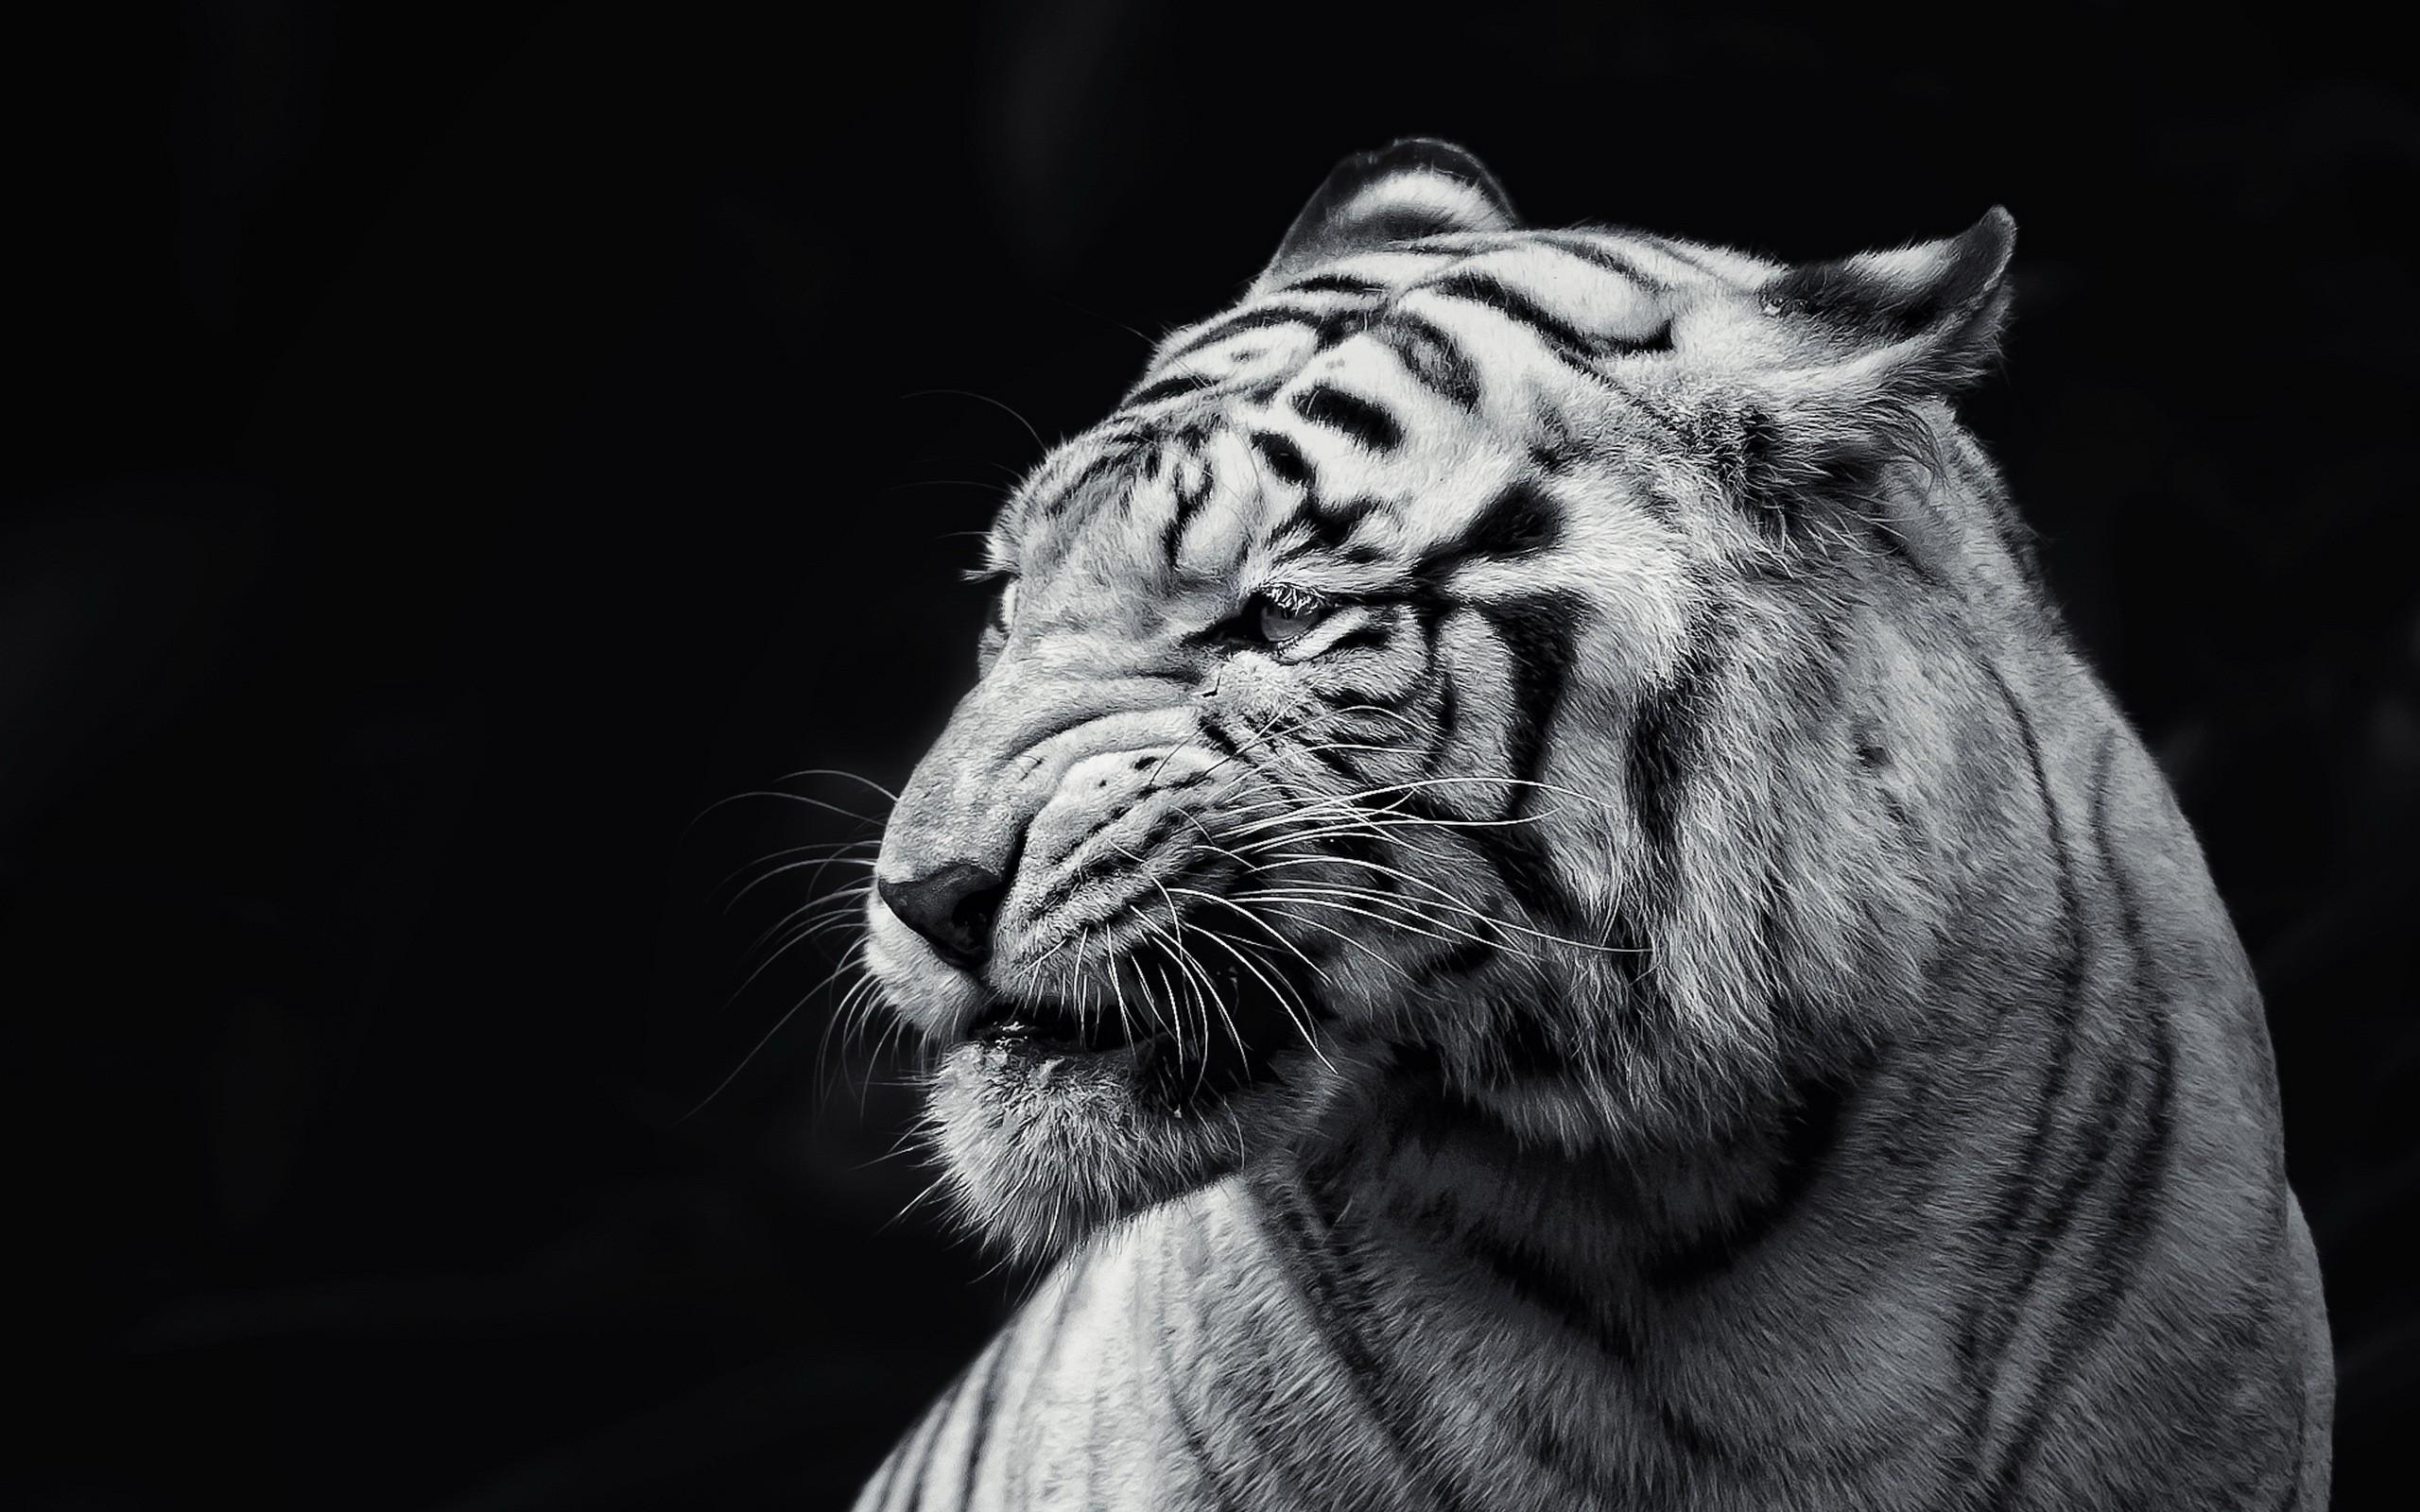 Black and White Tigerjpg Image JPEG 2560x1600 pixels 2560x1600